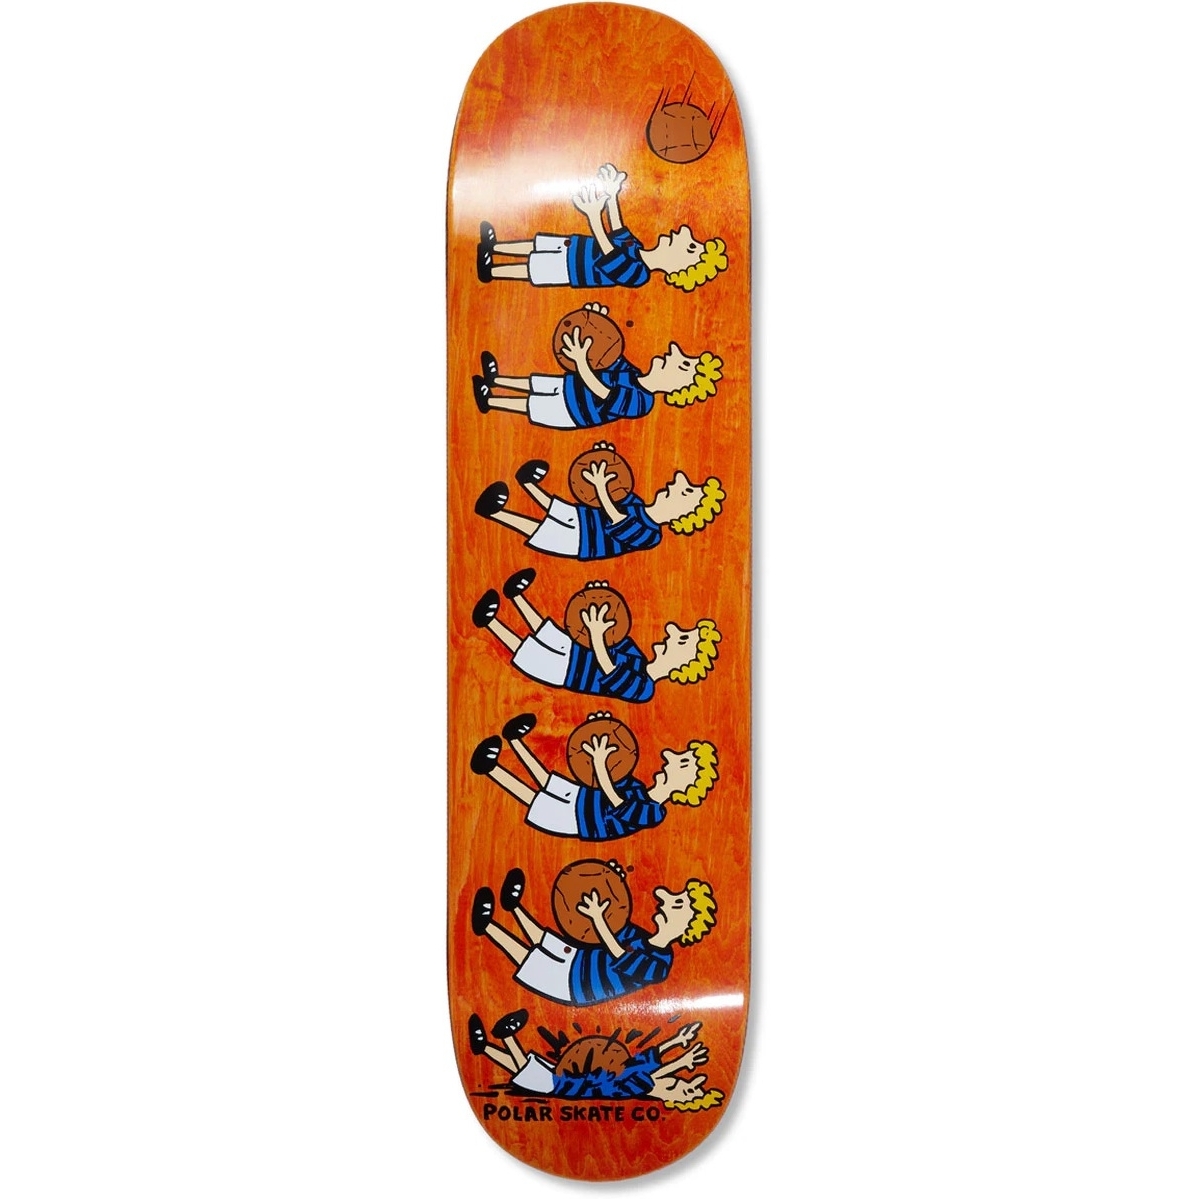 PAISLEY SKATES STICKER Paisley Skateboards 7 in x 2 in Skeleton Wizard Decal 